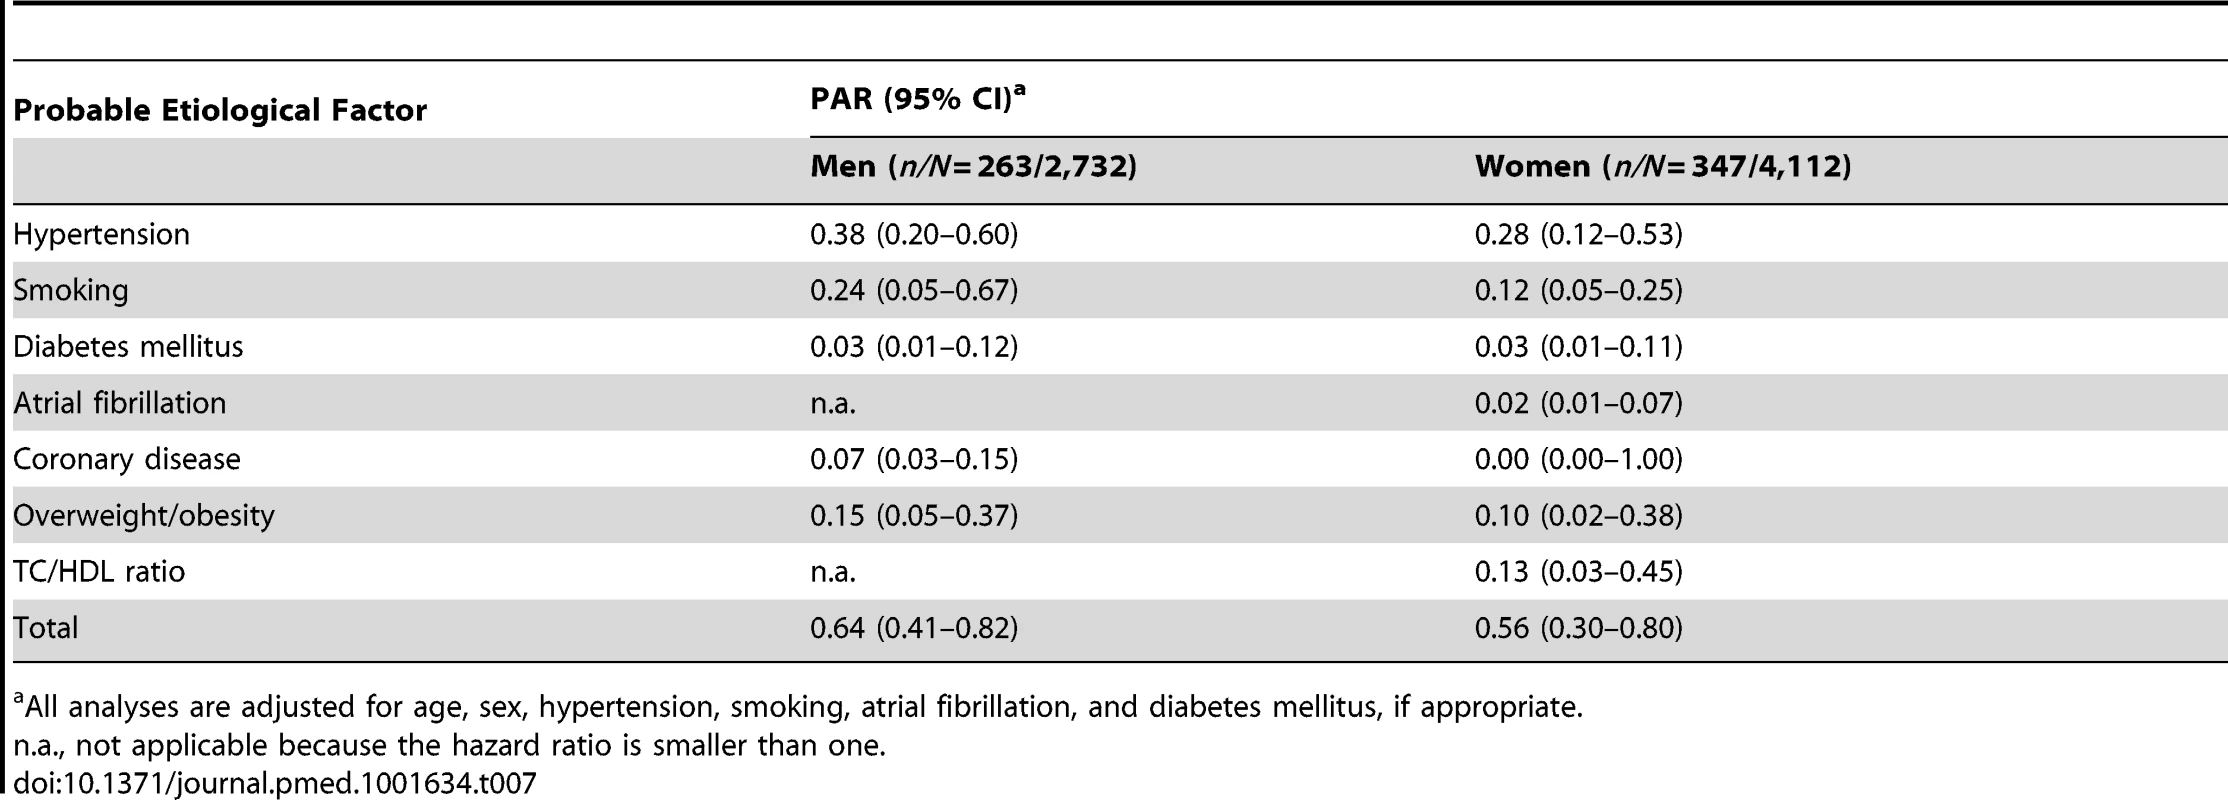 Population attributable risks of presumed etiological factors for ischemic stroke: men and women.